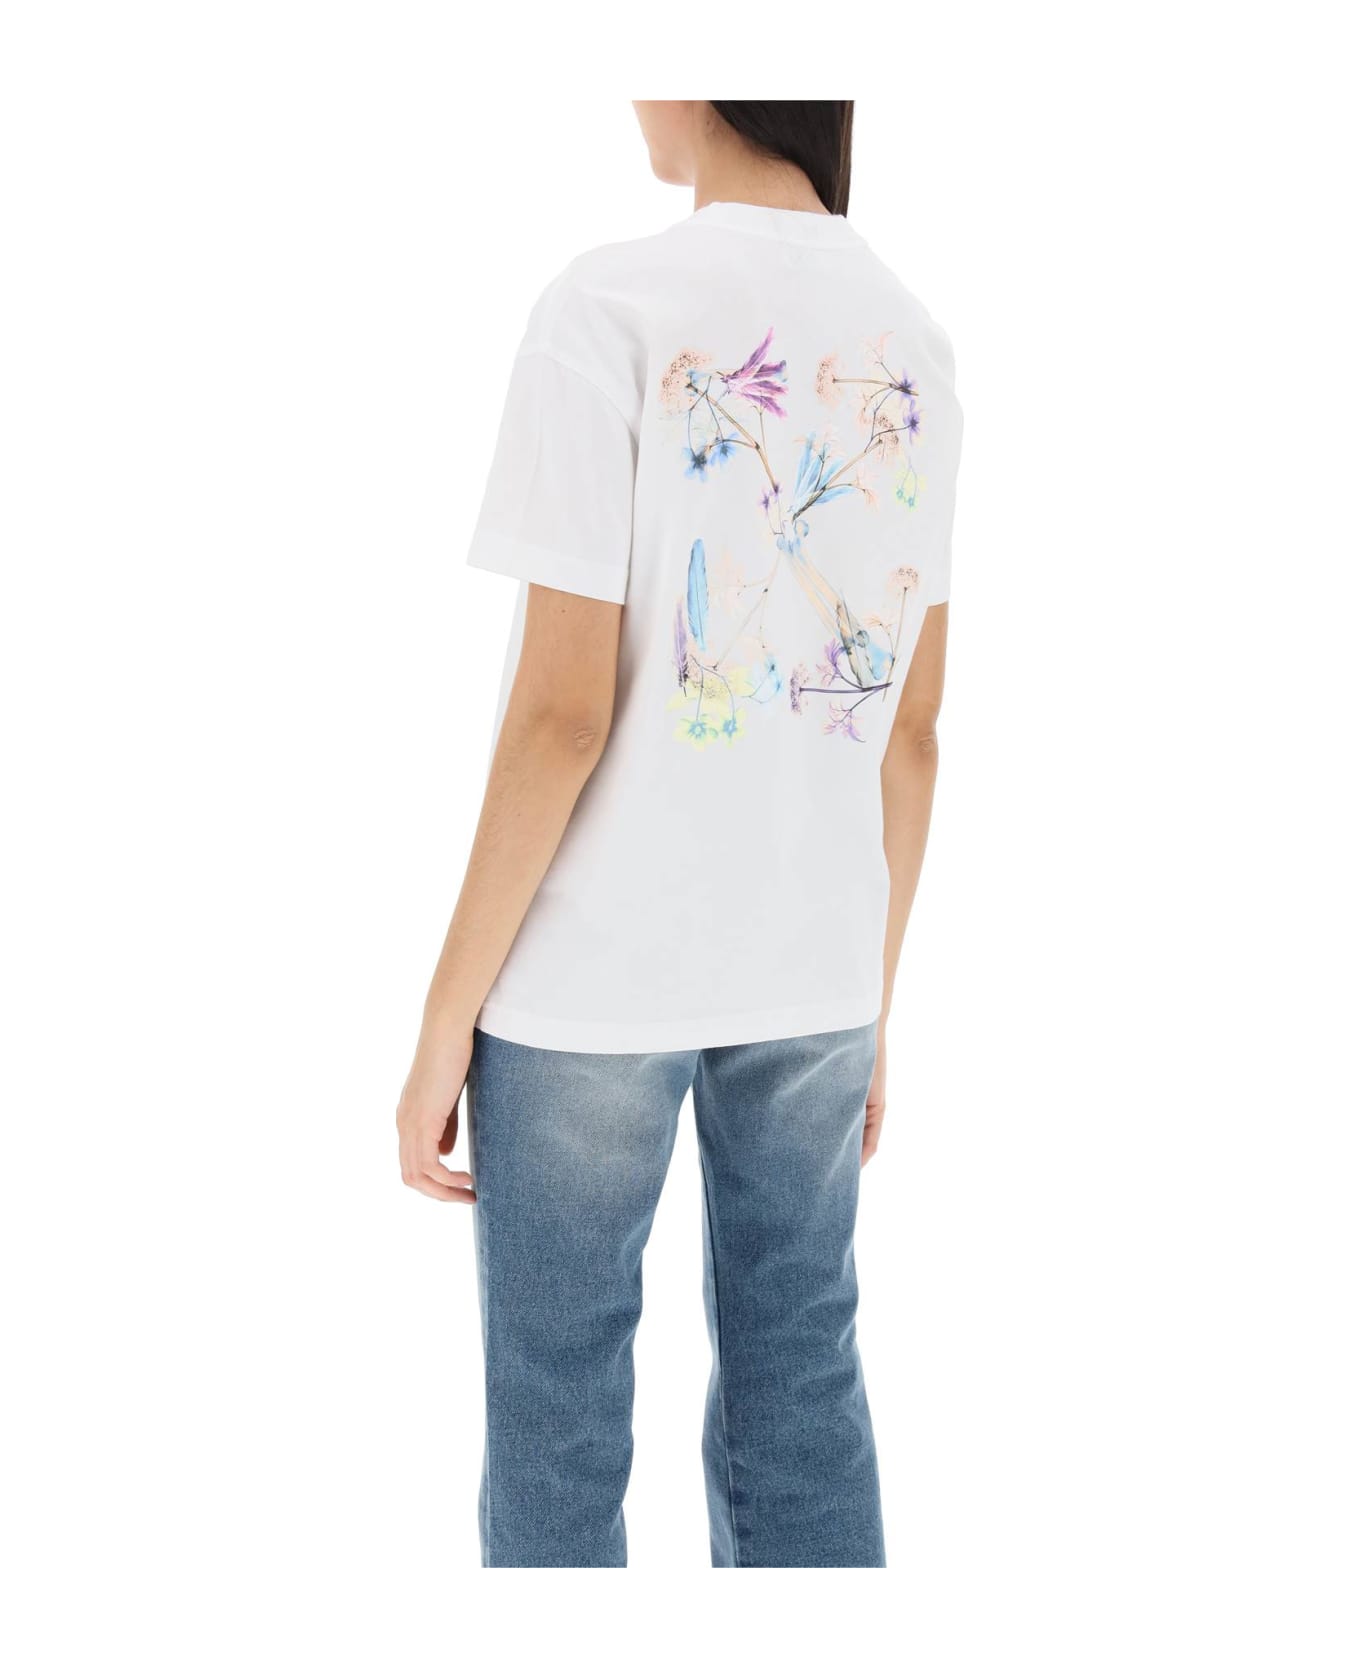 Off-White X-ray Arrow Crewneck T-shirt - White Multicolor Tシャツ